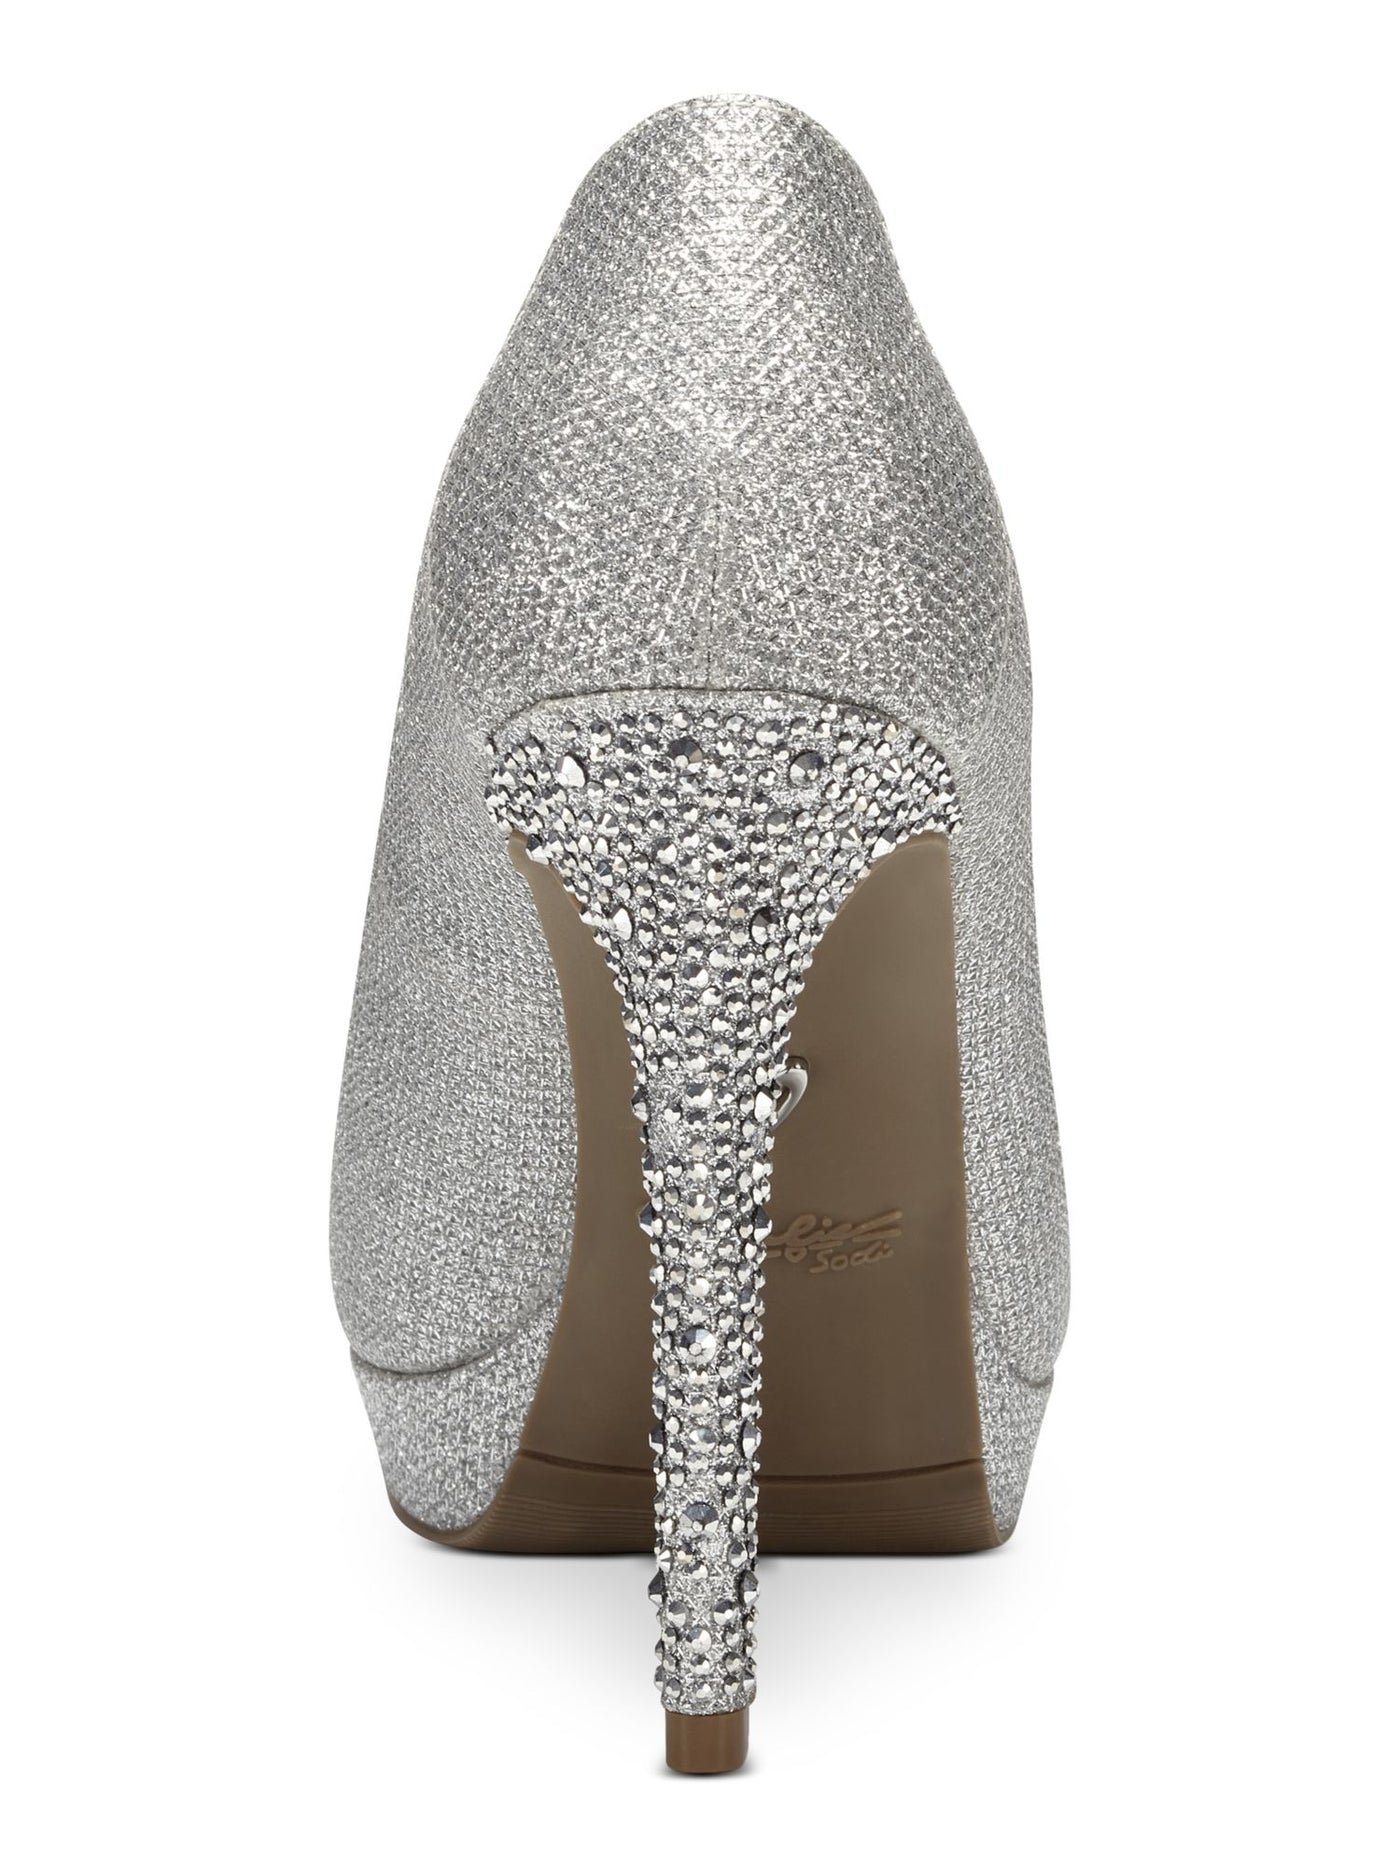 THALIA SODI Womens Silver Glitter Padded Embellished Lenna Peep Toe Stiletto Slip On Dress Pumps Shoes 9.5 M